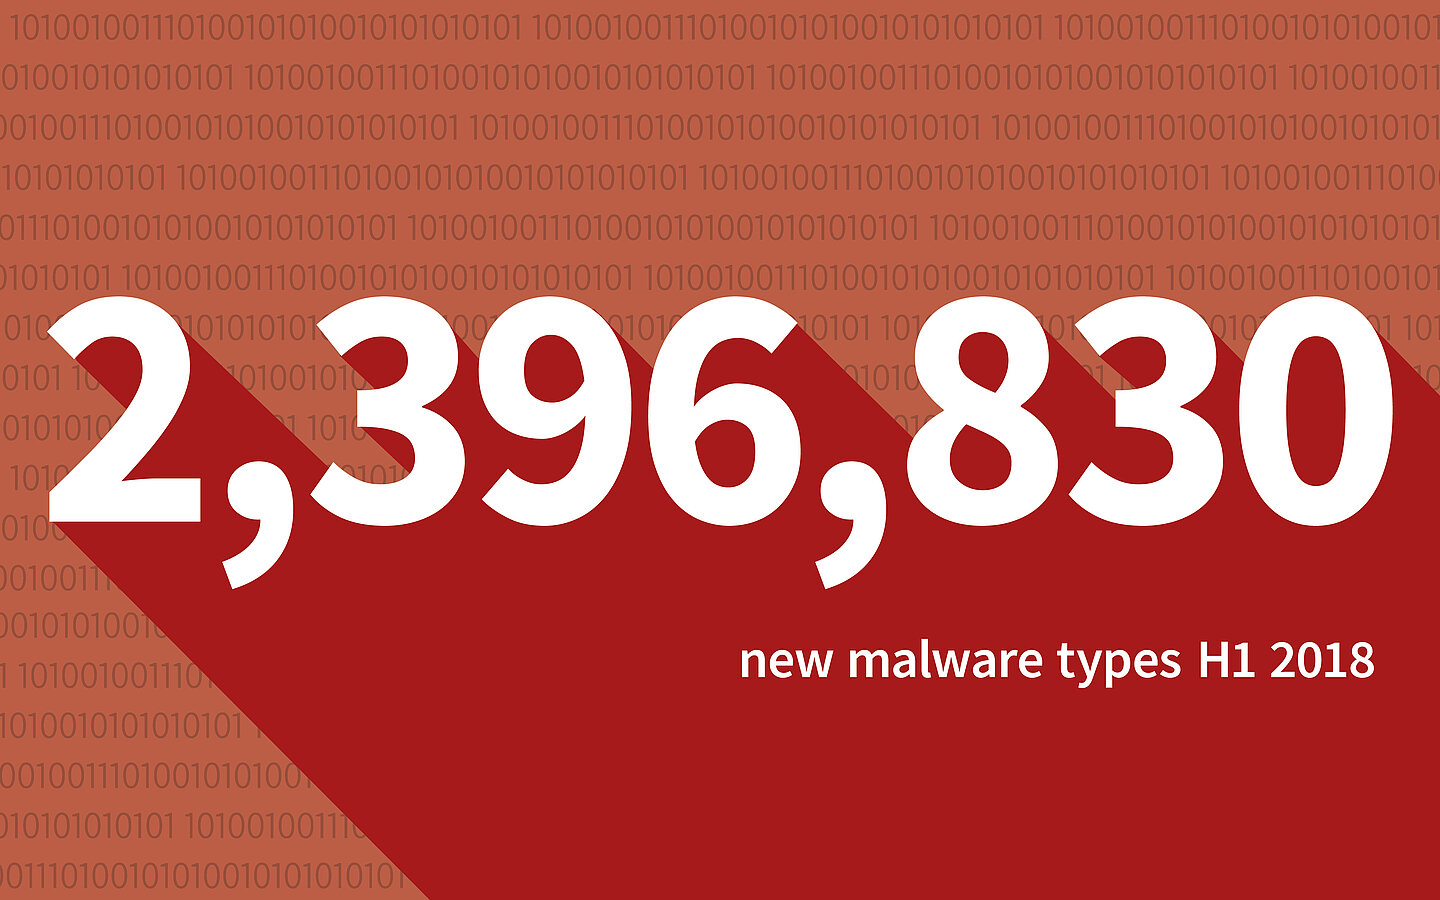 G DATA identified 2.396.830 malwaretypes in the first half of 2018